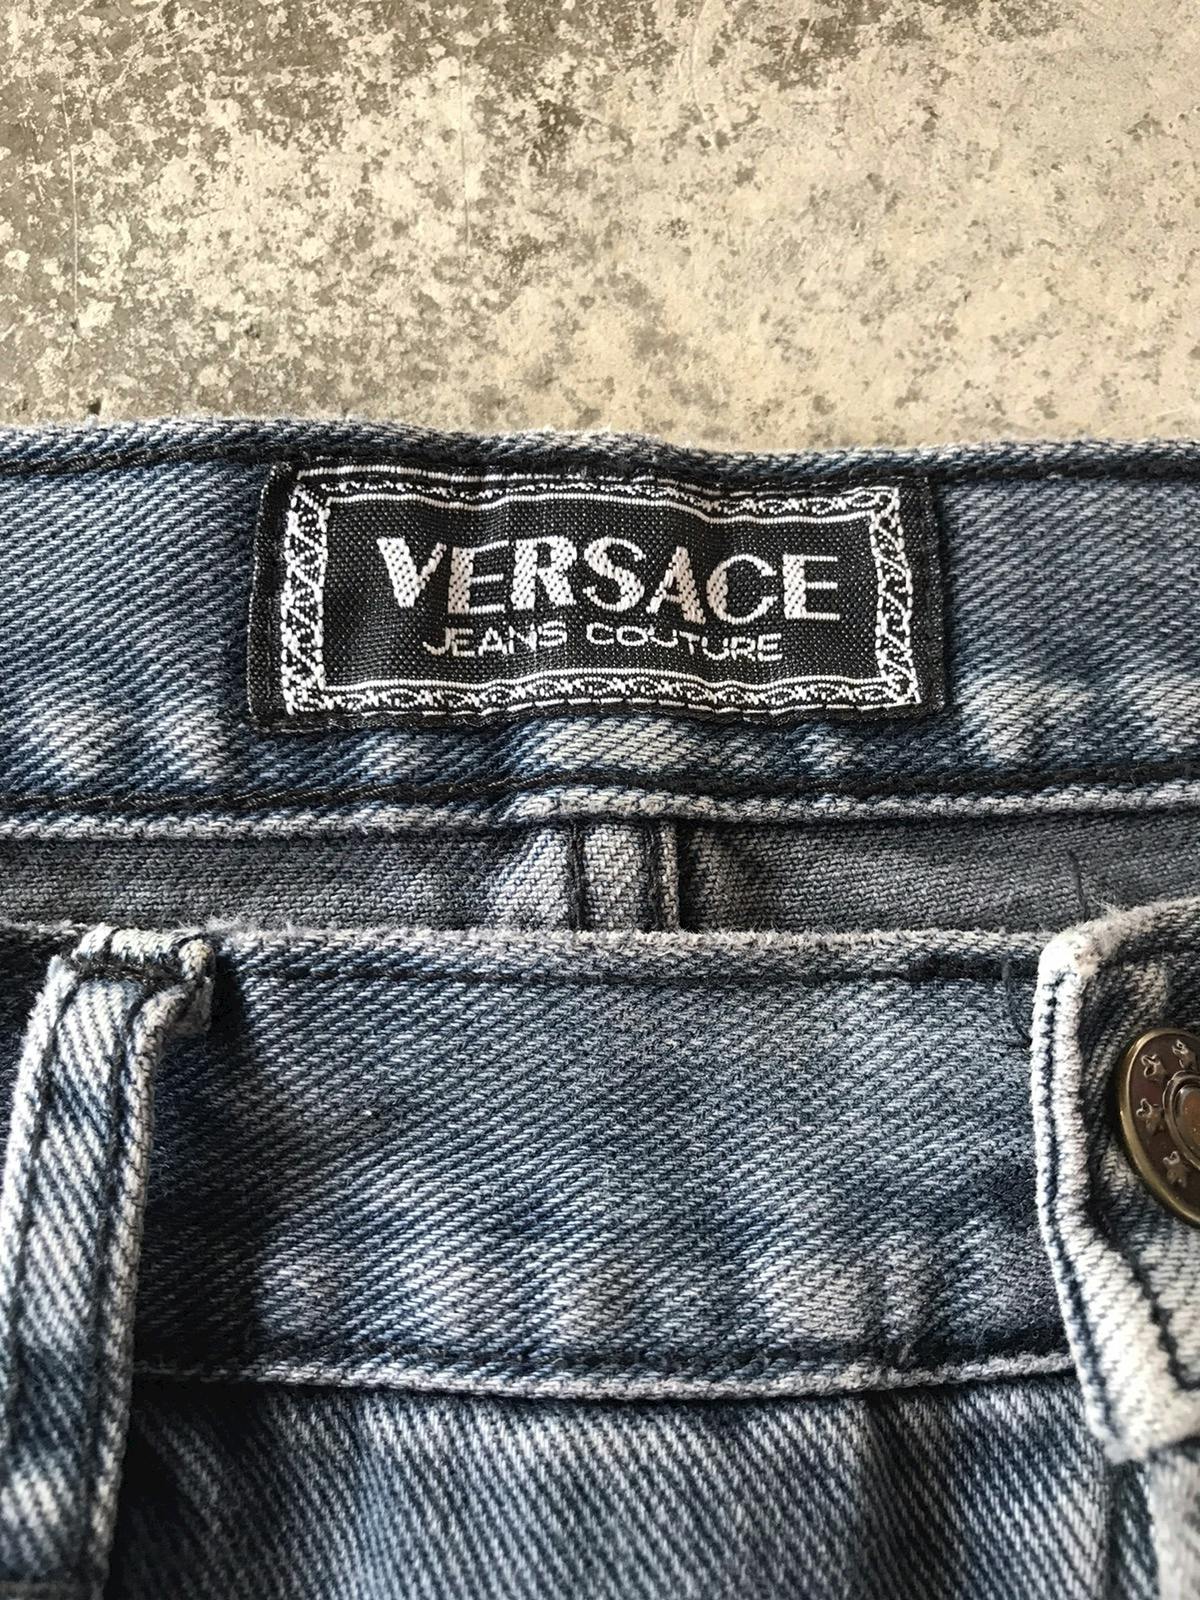 Vintage Versace Jeans Couture distressed Denim - 6